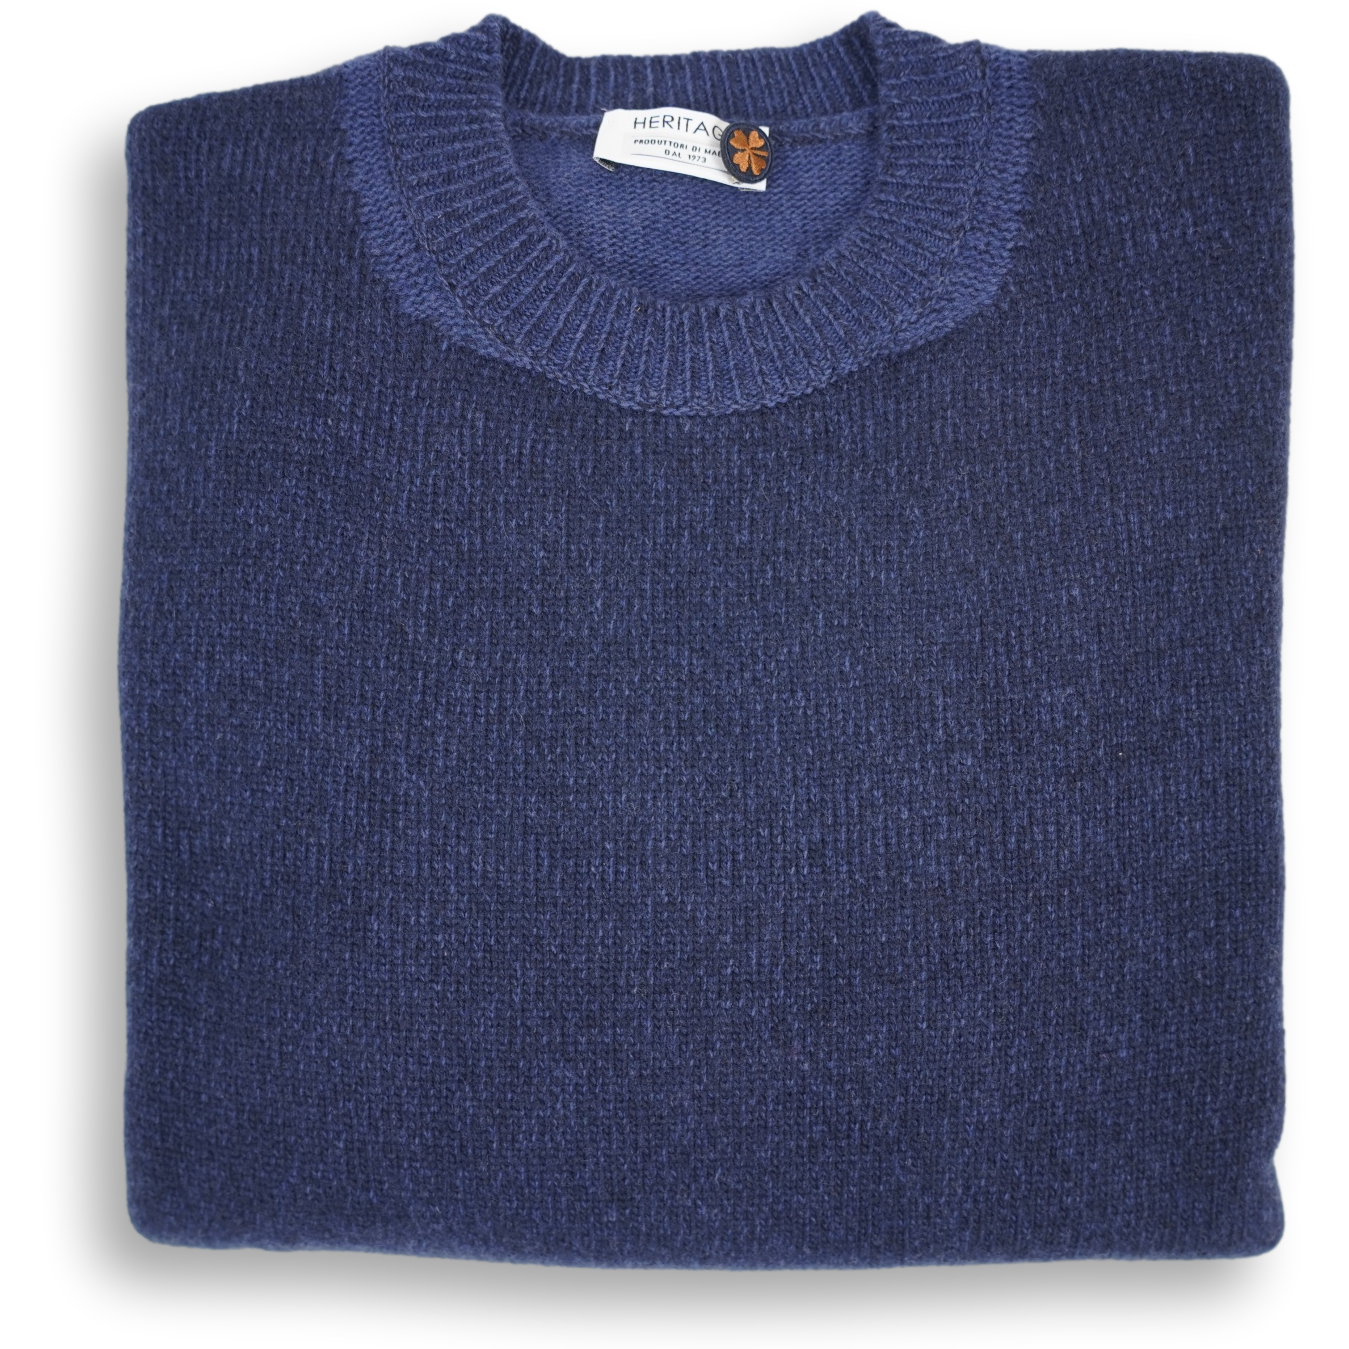 Heritage Virgin Wool and Shetland Wool Blend Crewneck Sweater